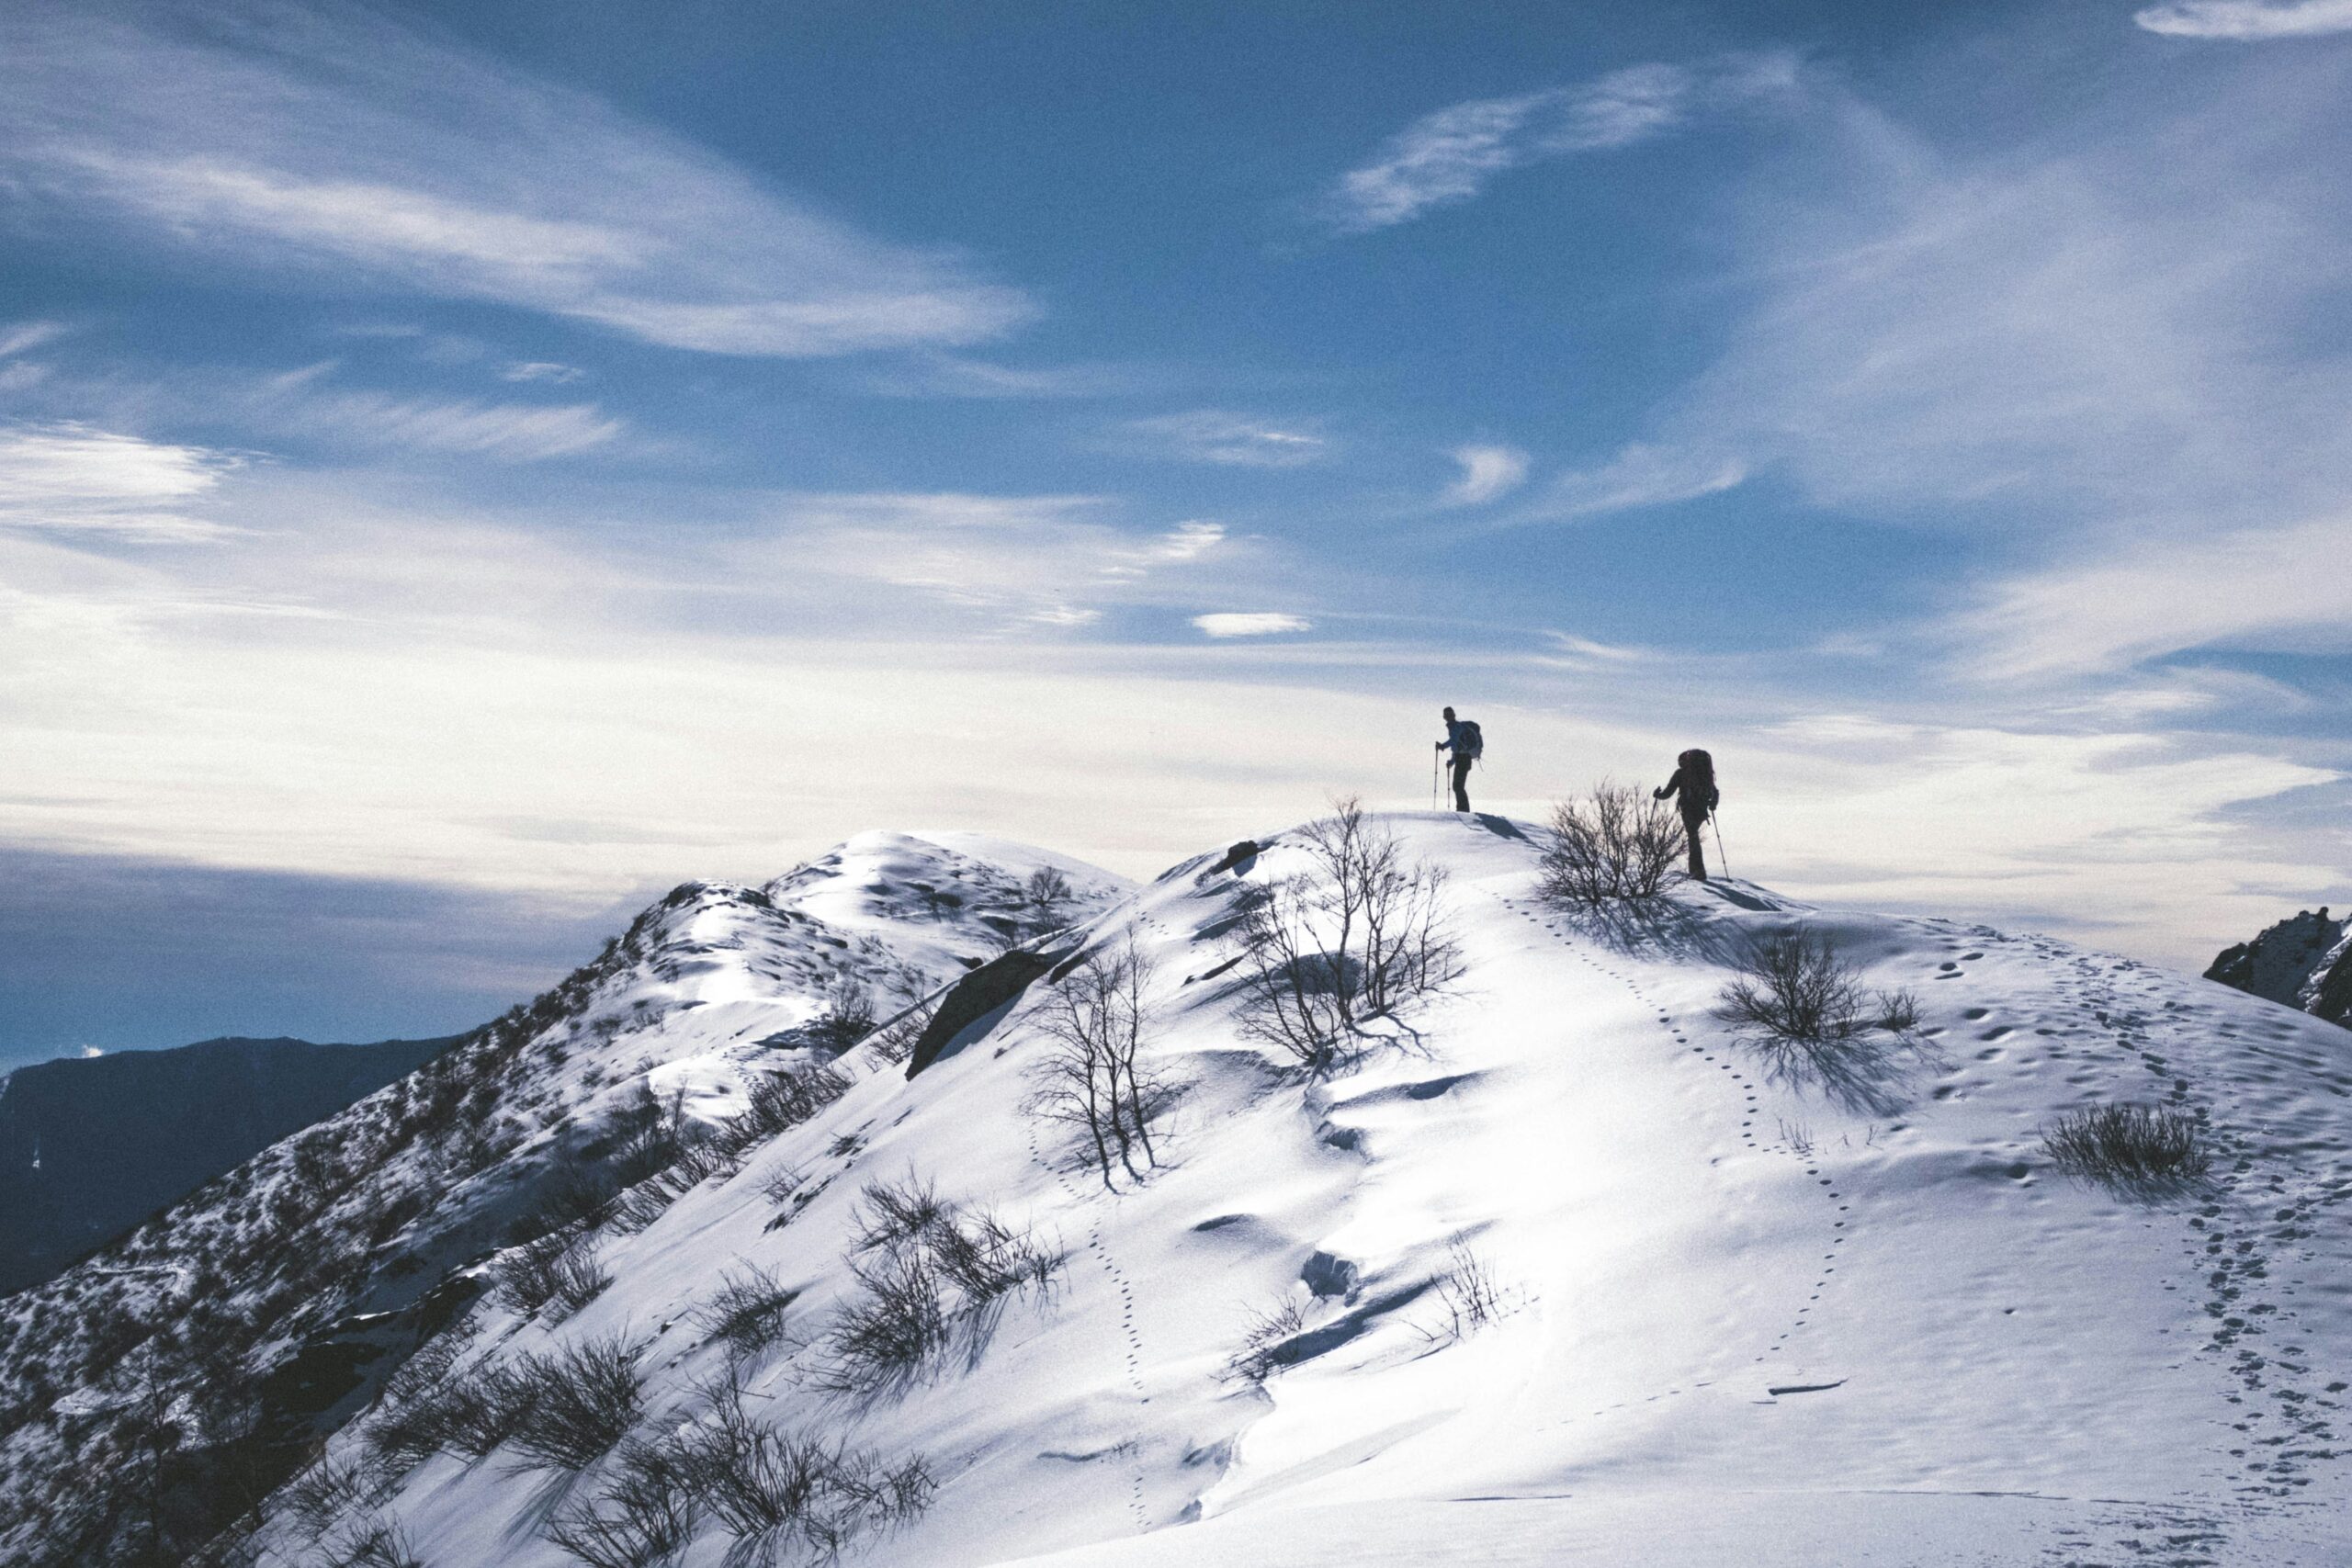 Can I Use Trekking Poles While Climbing Mount Shasta?